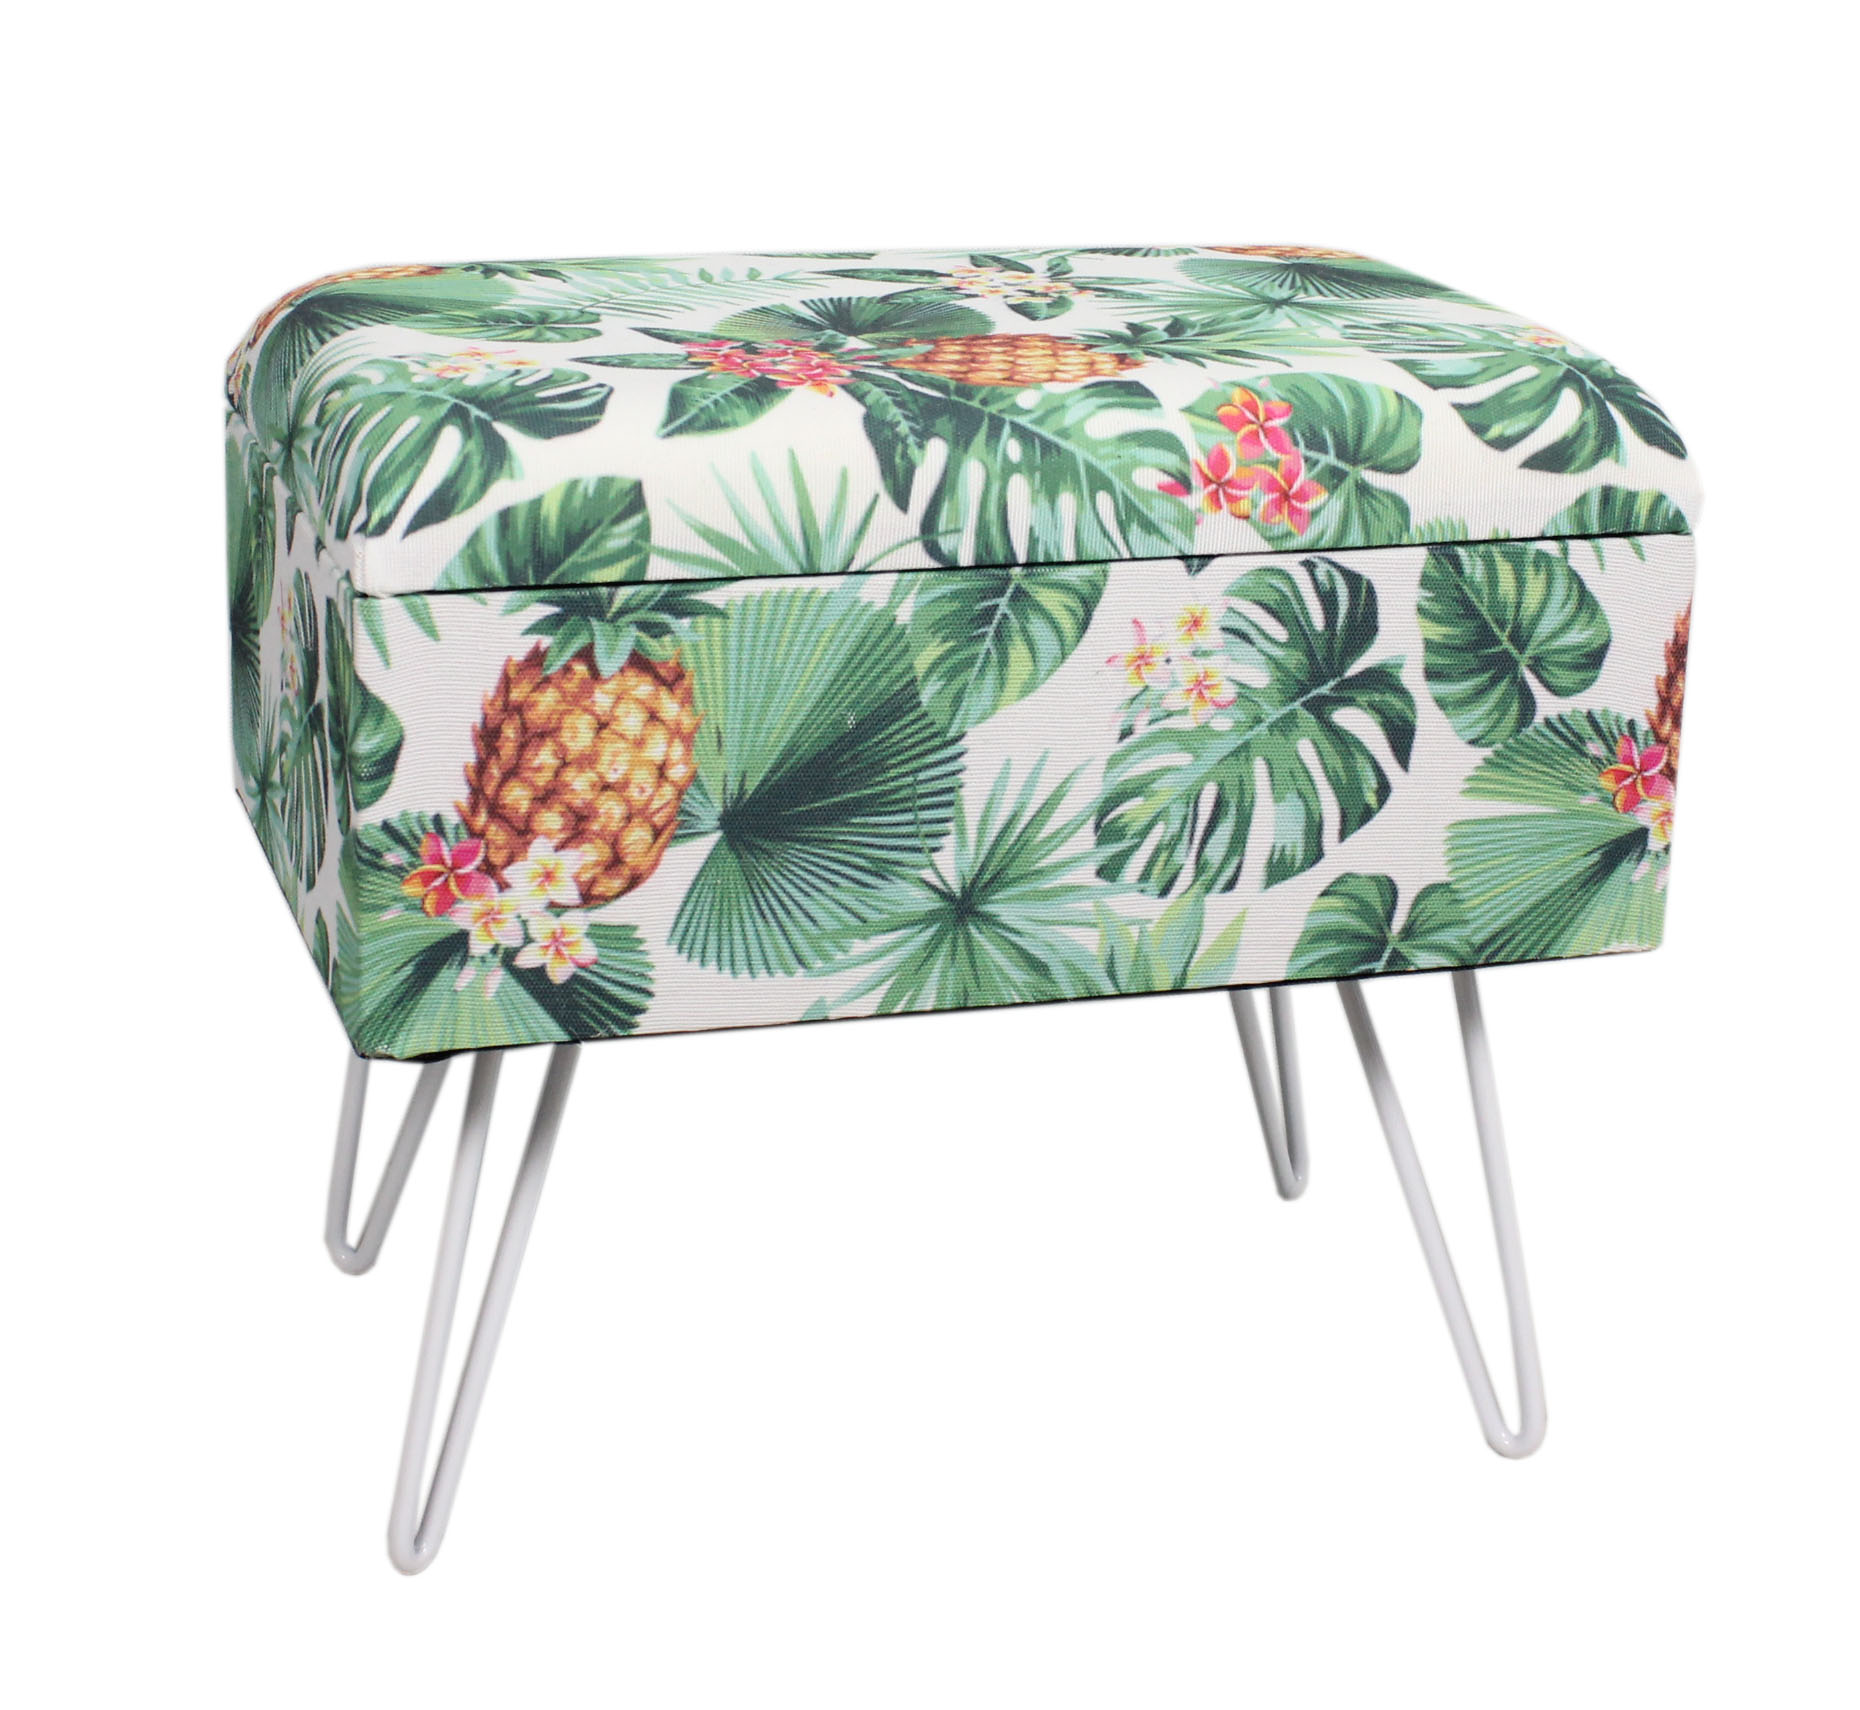 Wood & Fabric Footstool with leaf design-5598